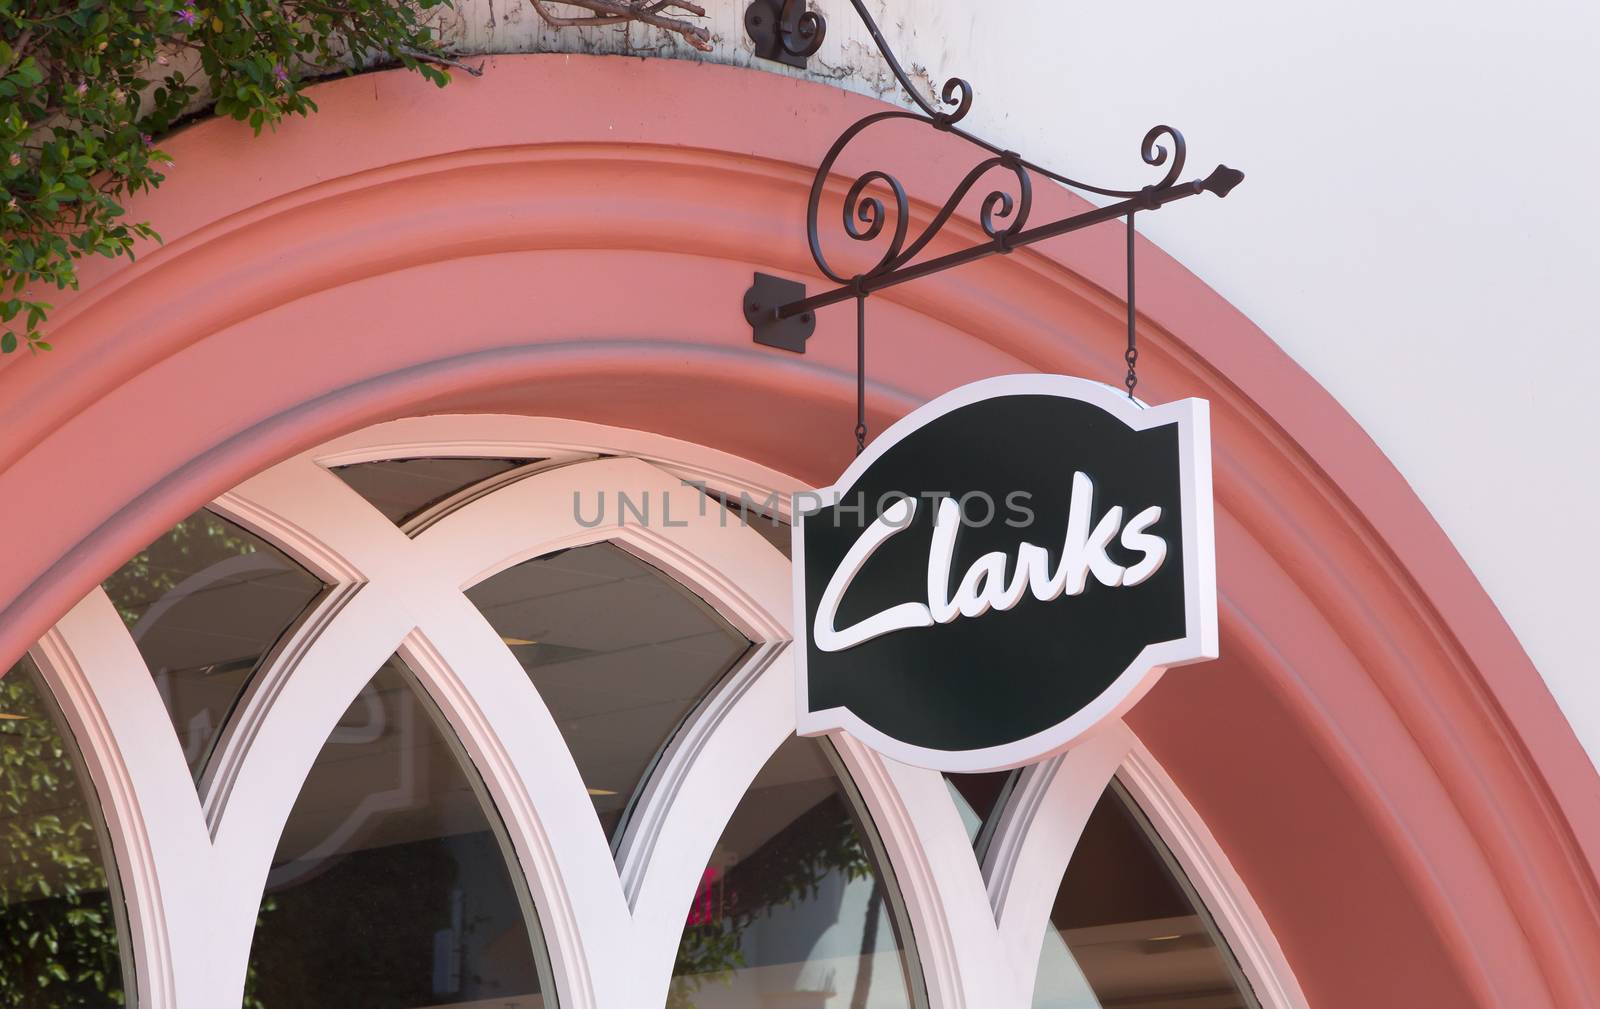 SANTA BARBARA, CA/USA - APRIL 30, 2016: Clarks retail store exterior and sign. C. & J. Clark International Ltd. is a British shoe manufacturer and retailer.